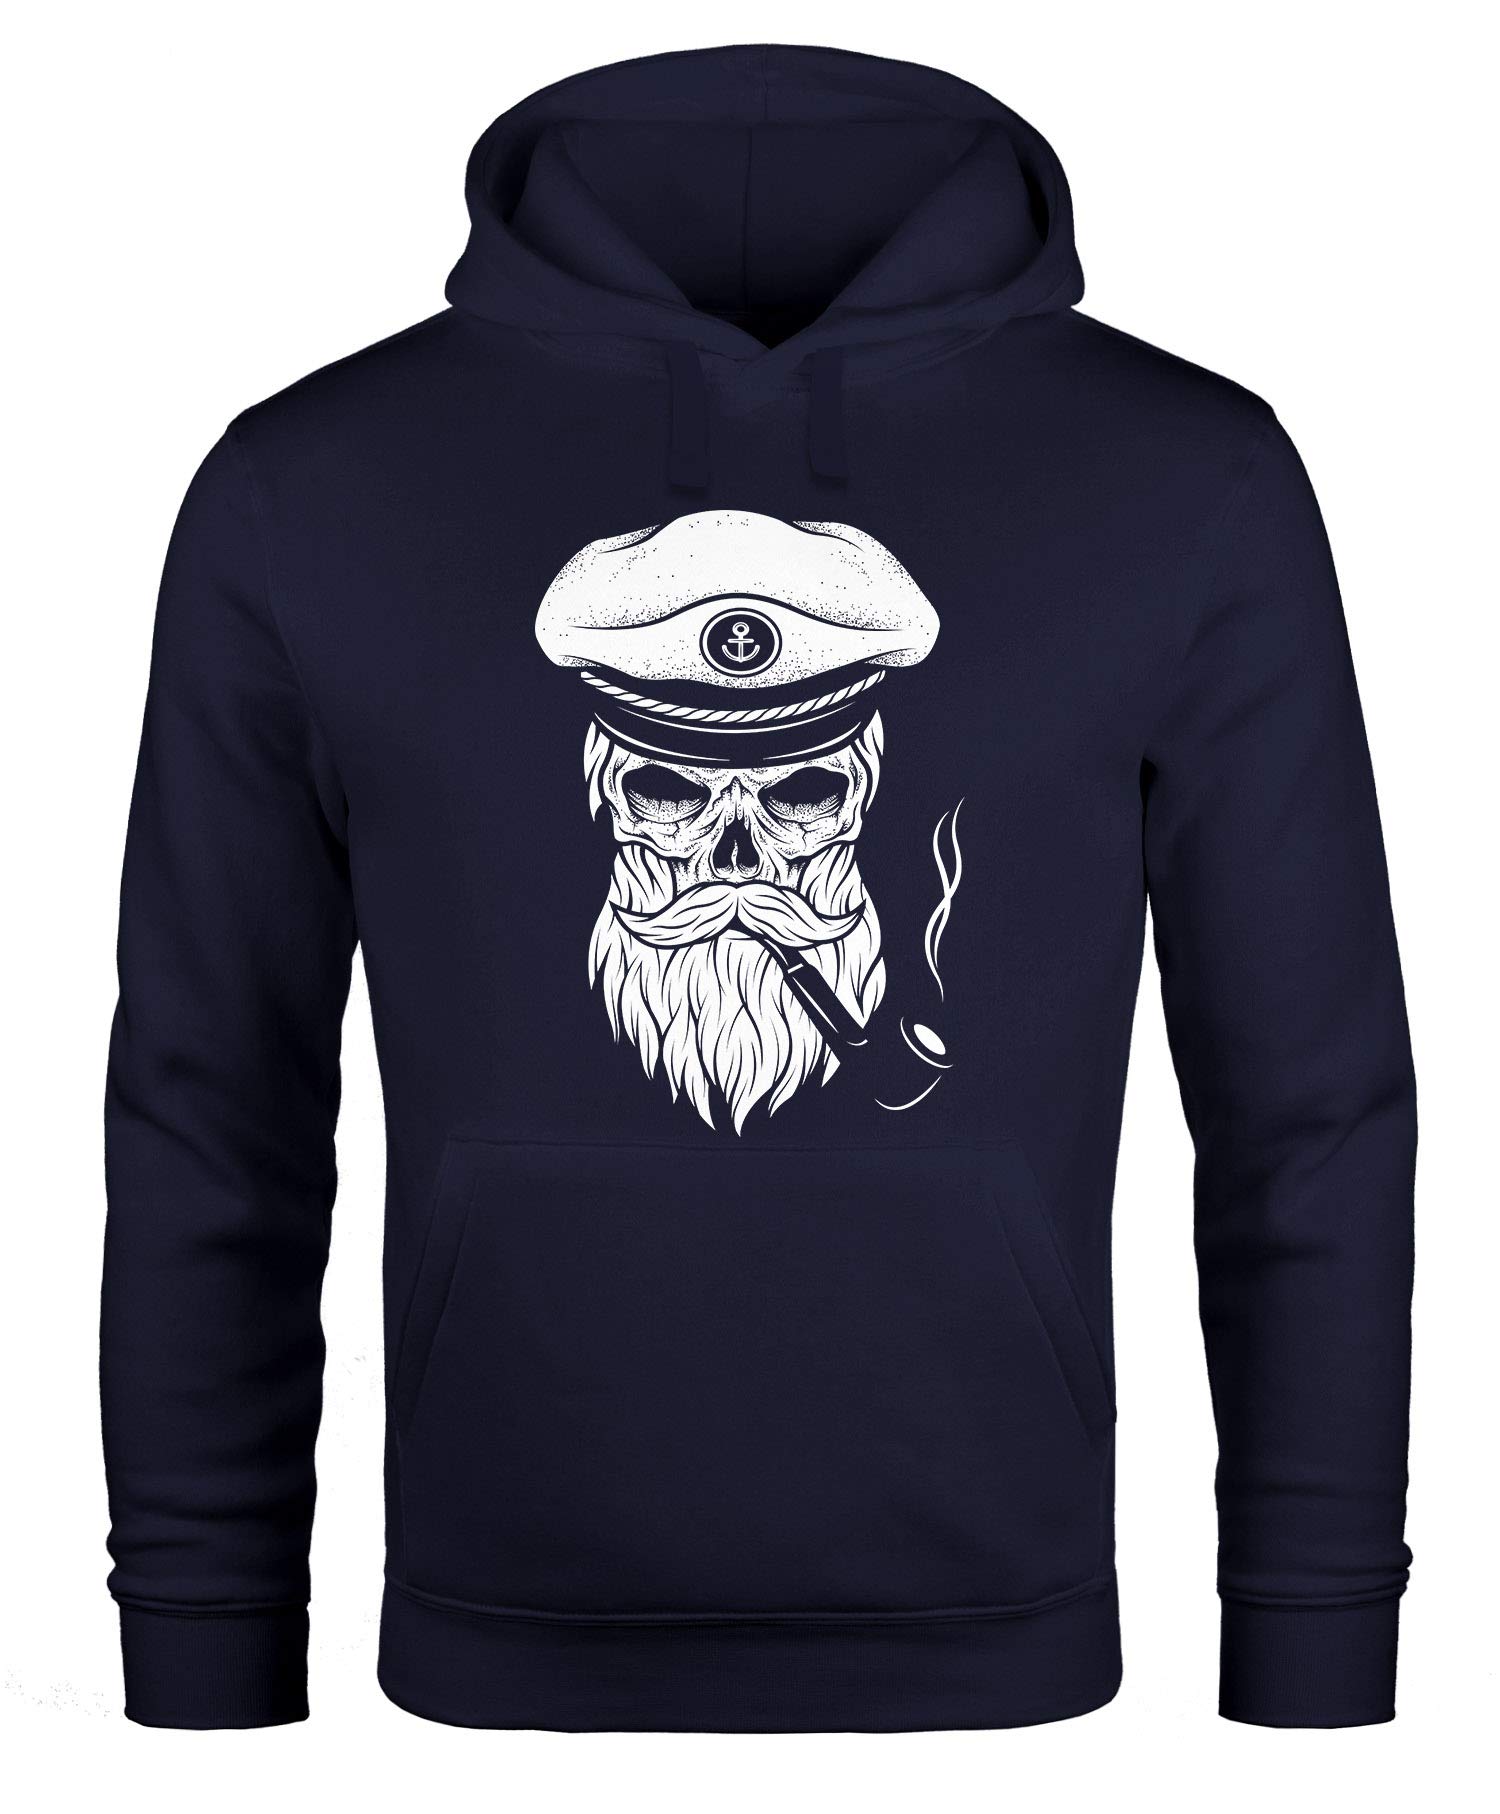 Neverless Hoodie Herren Sweatshirt Totenkopf Kapitän Captain Skull Bard Hipster Original Spirit Seemann Navy M